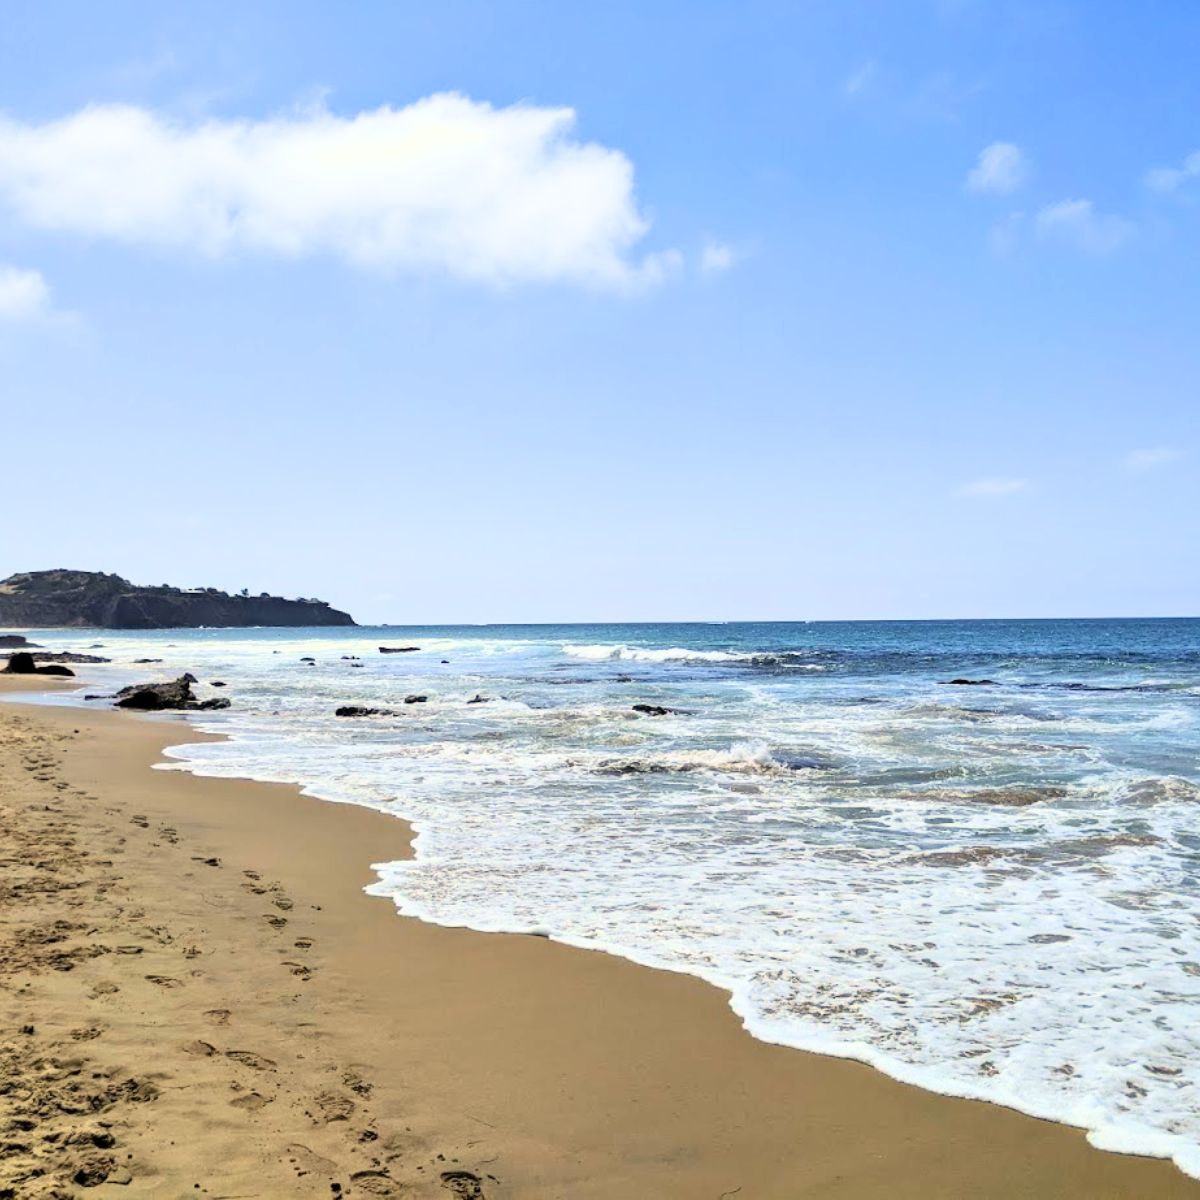 California Coastal Cleanup Day